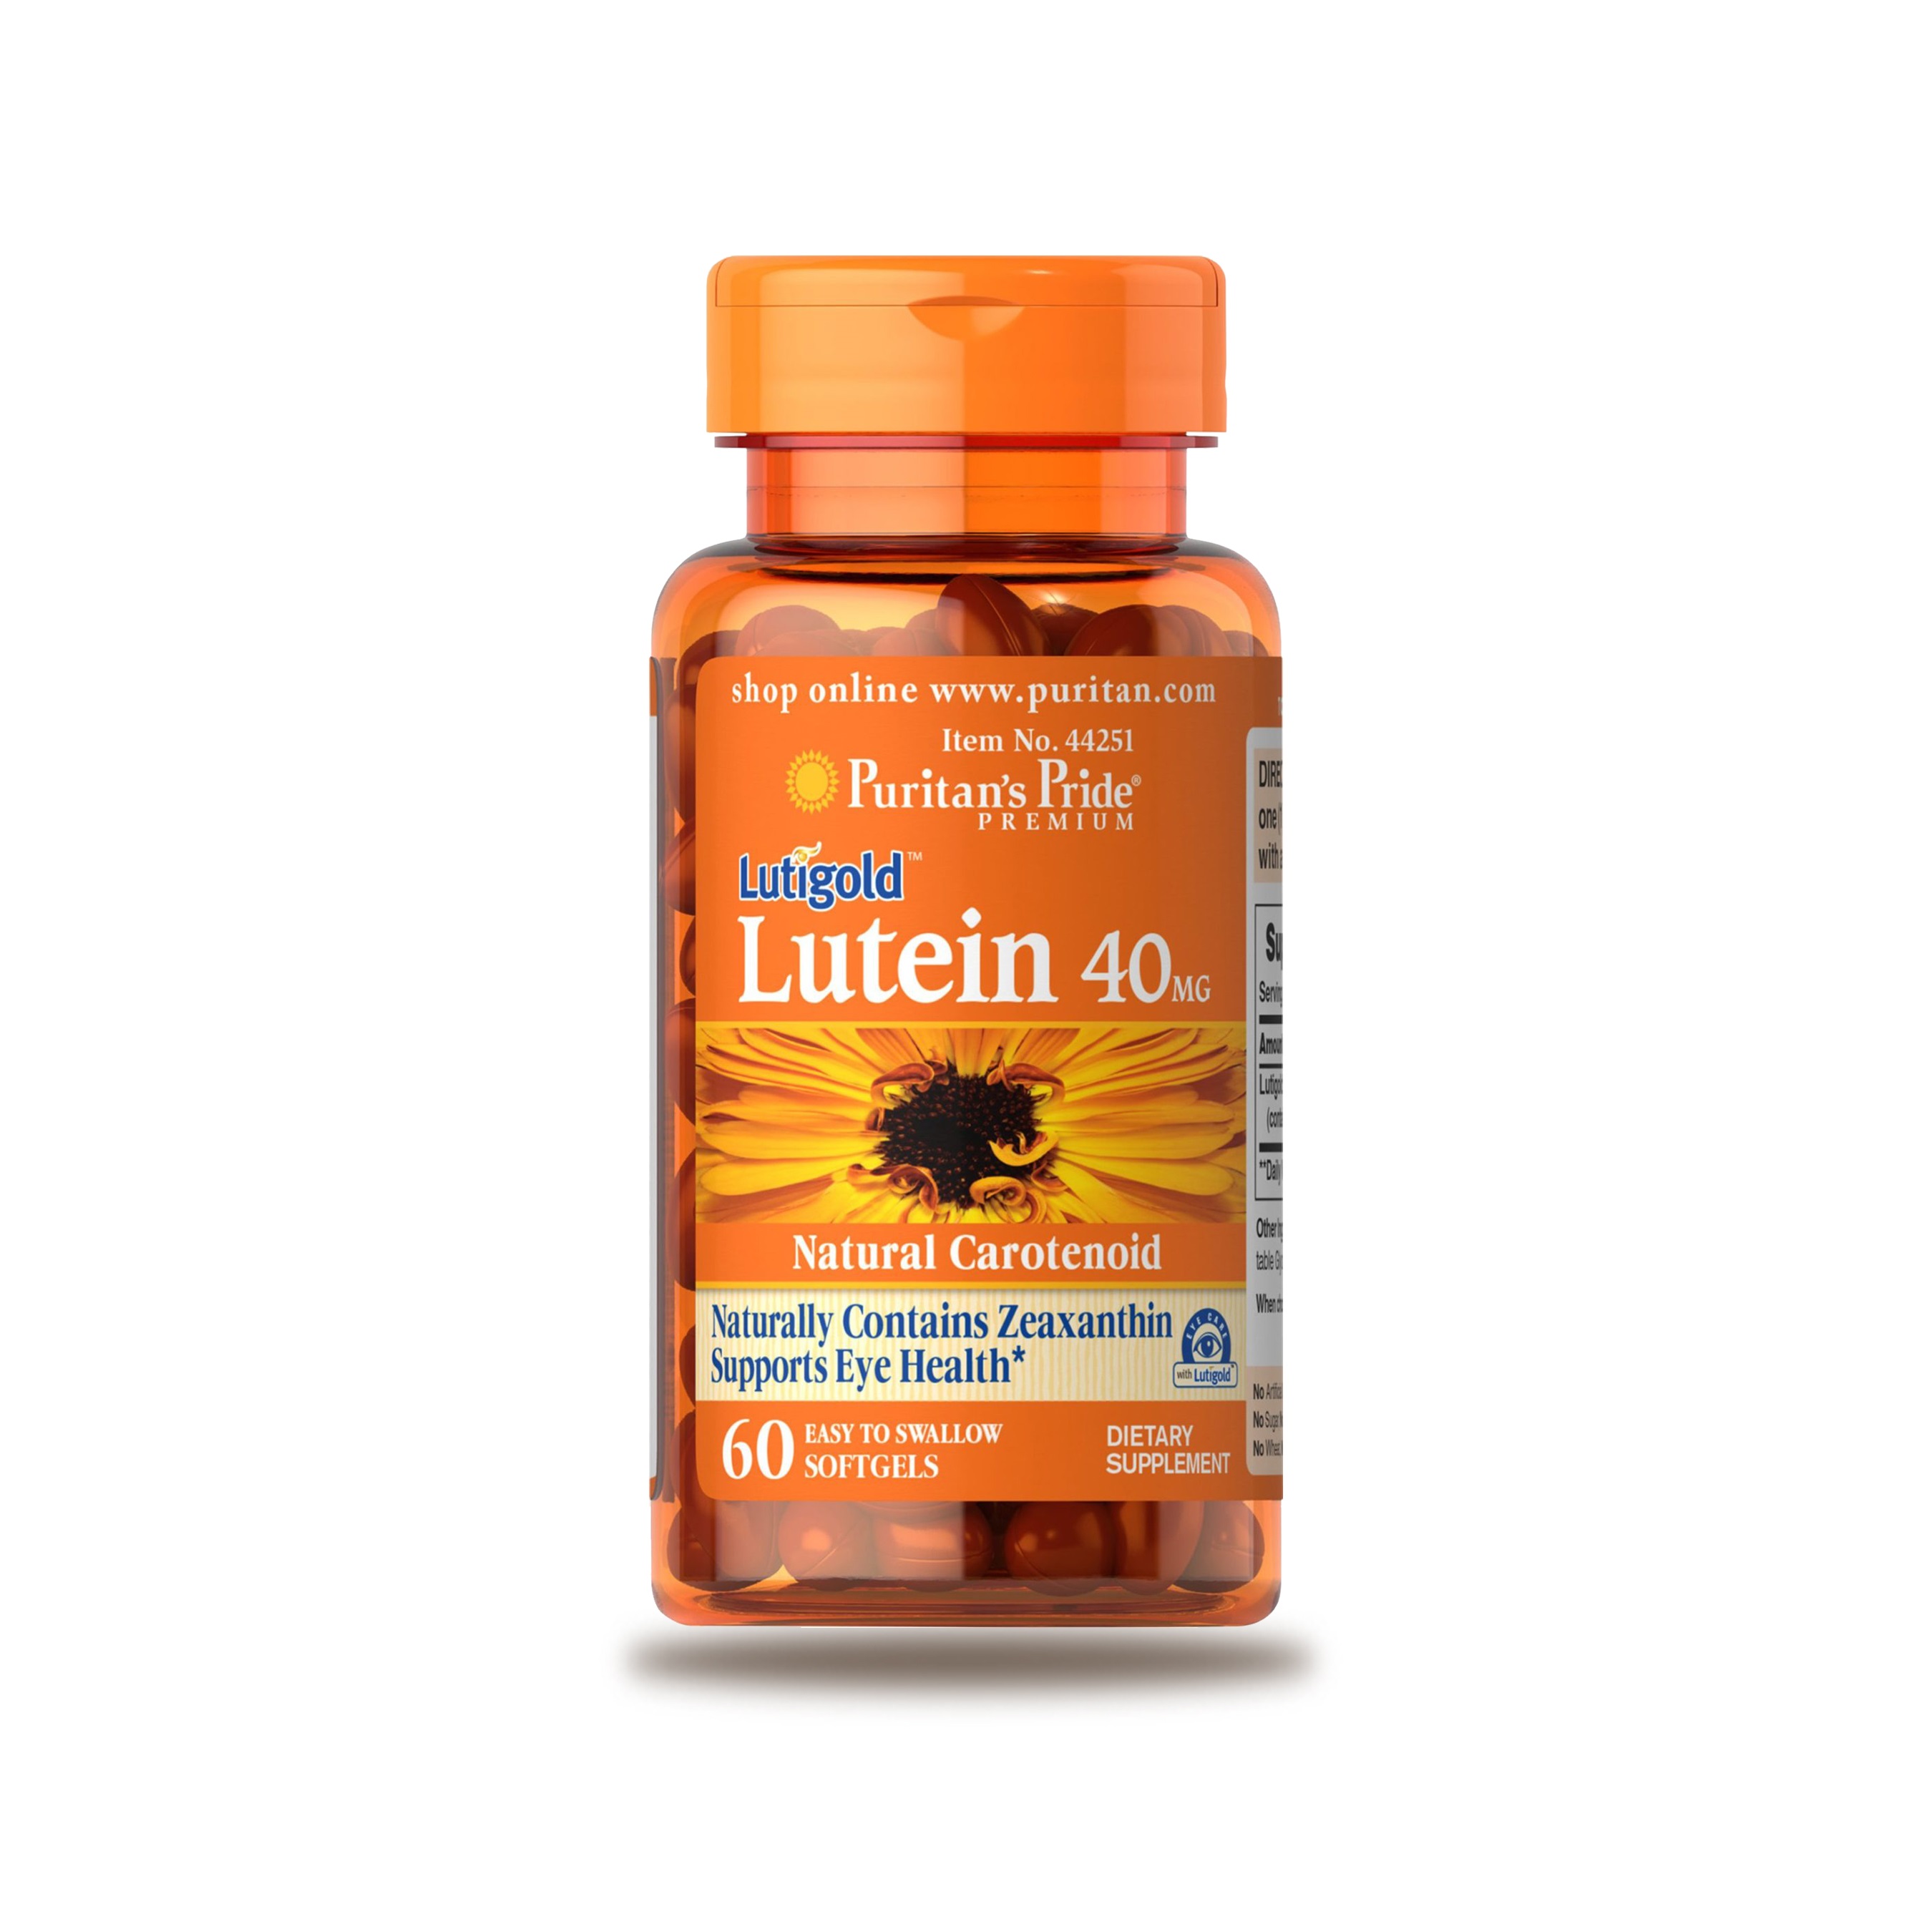 Puritan’s Pride Lutein 40 mg with Zeaxanthin